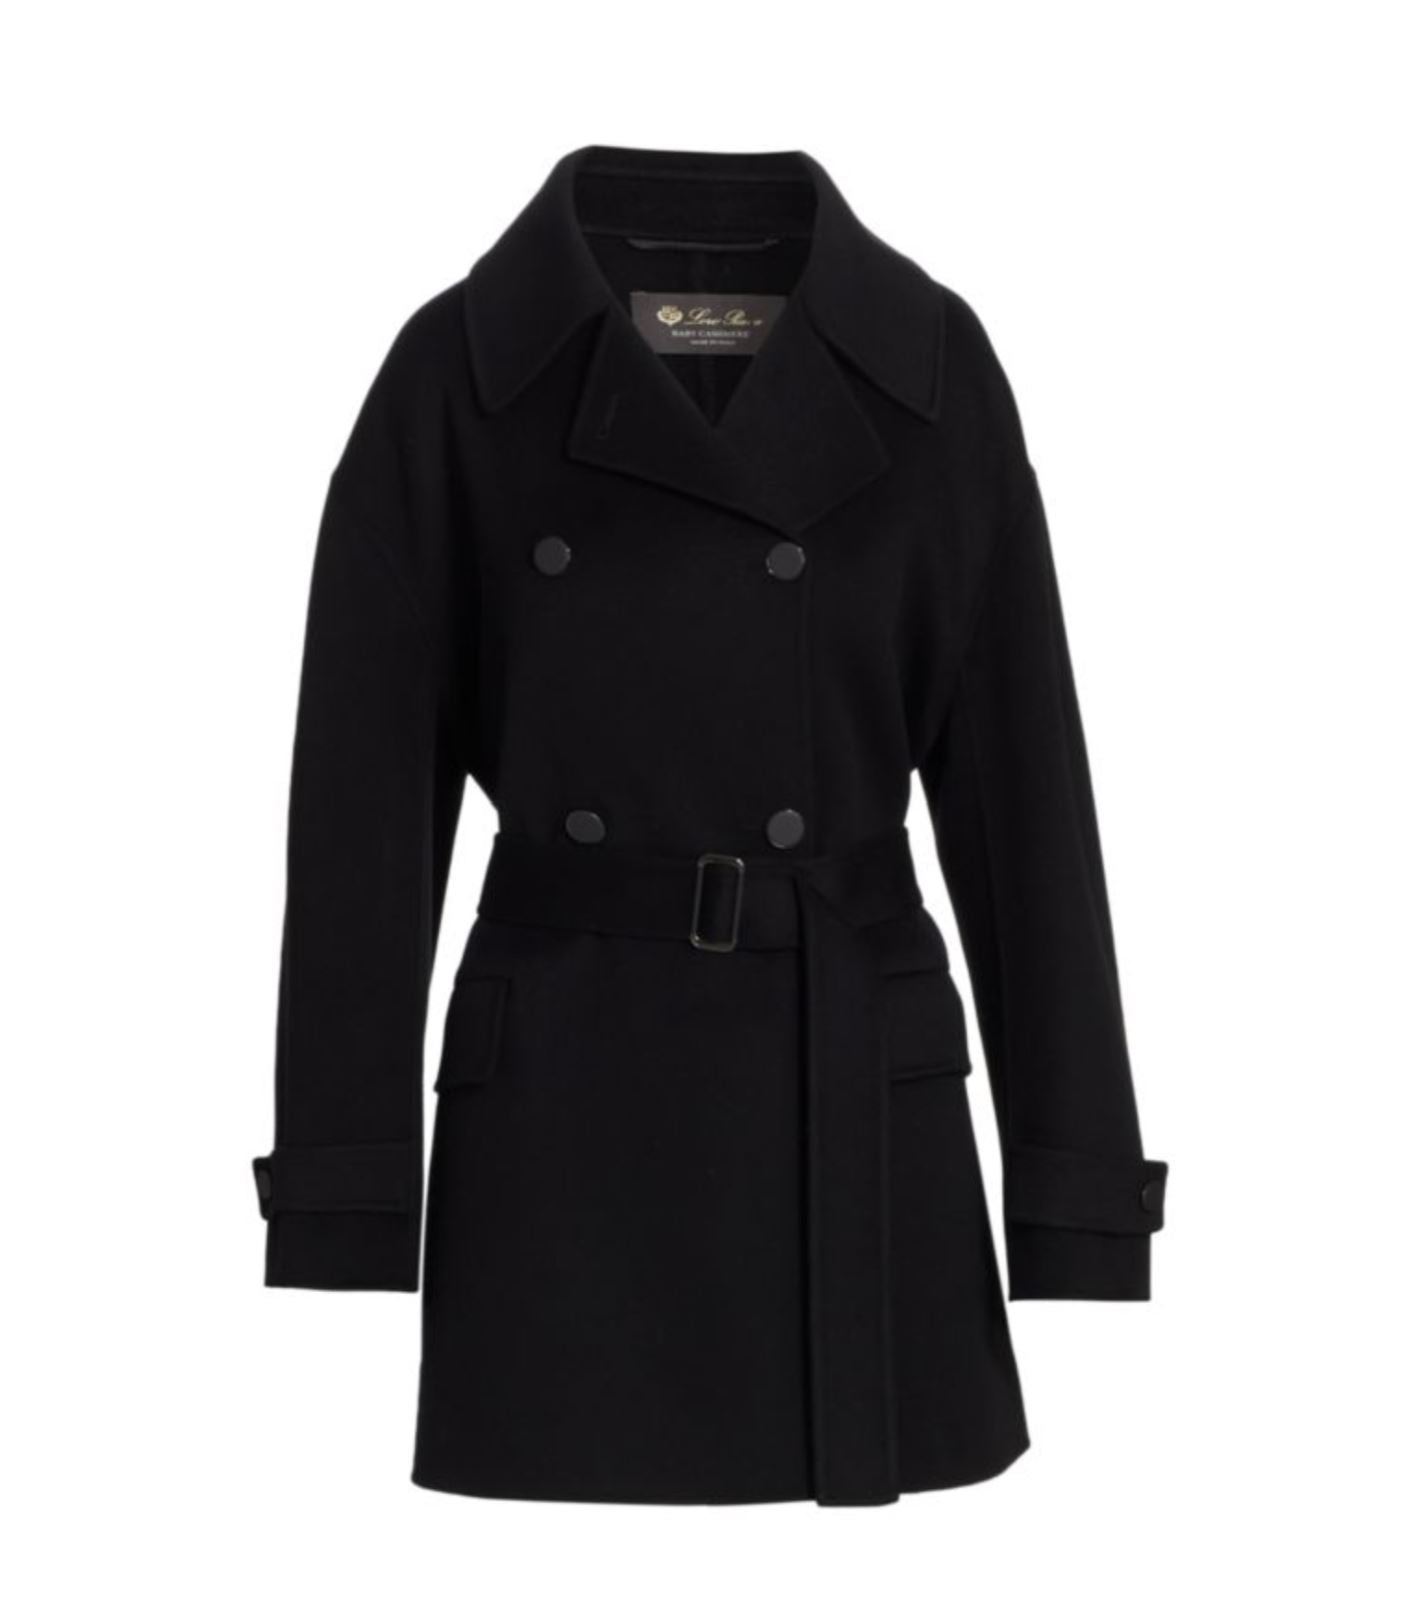 NWT $8085 Loro Piana Women's Cashmere Coat Black 40 Euro Made in Italy